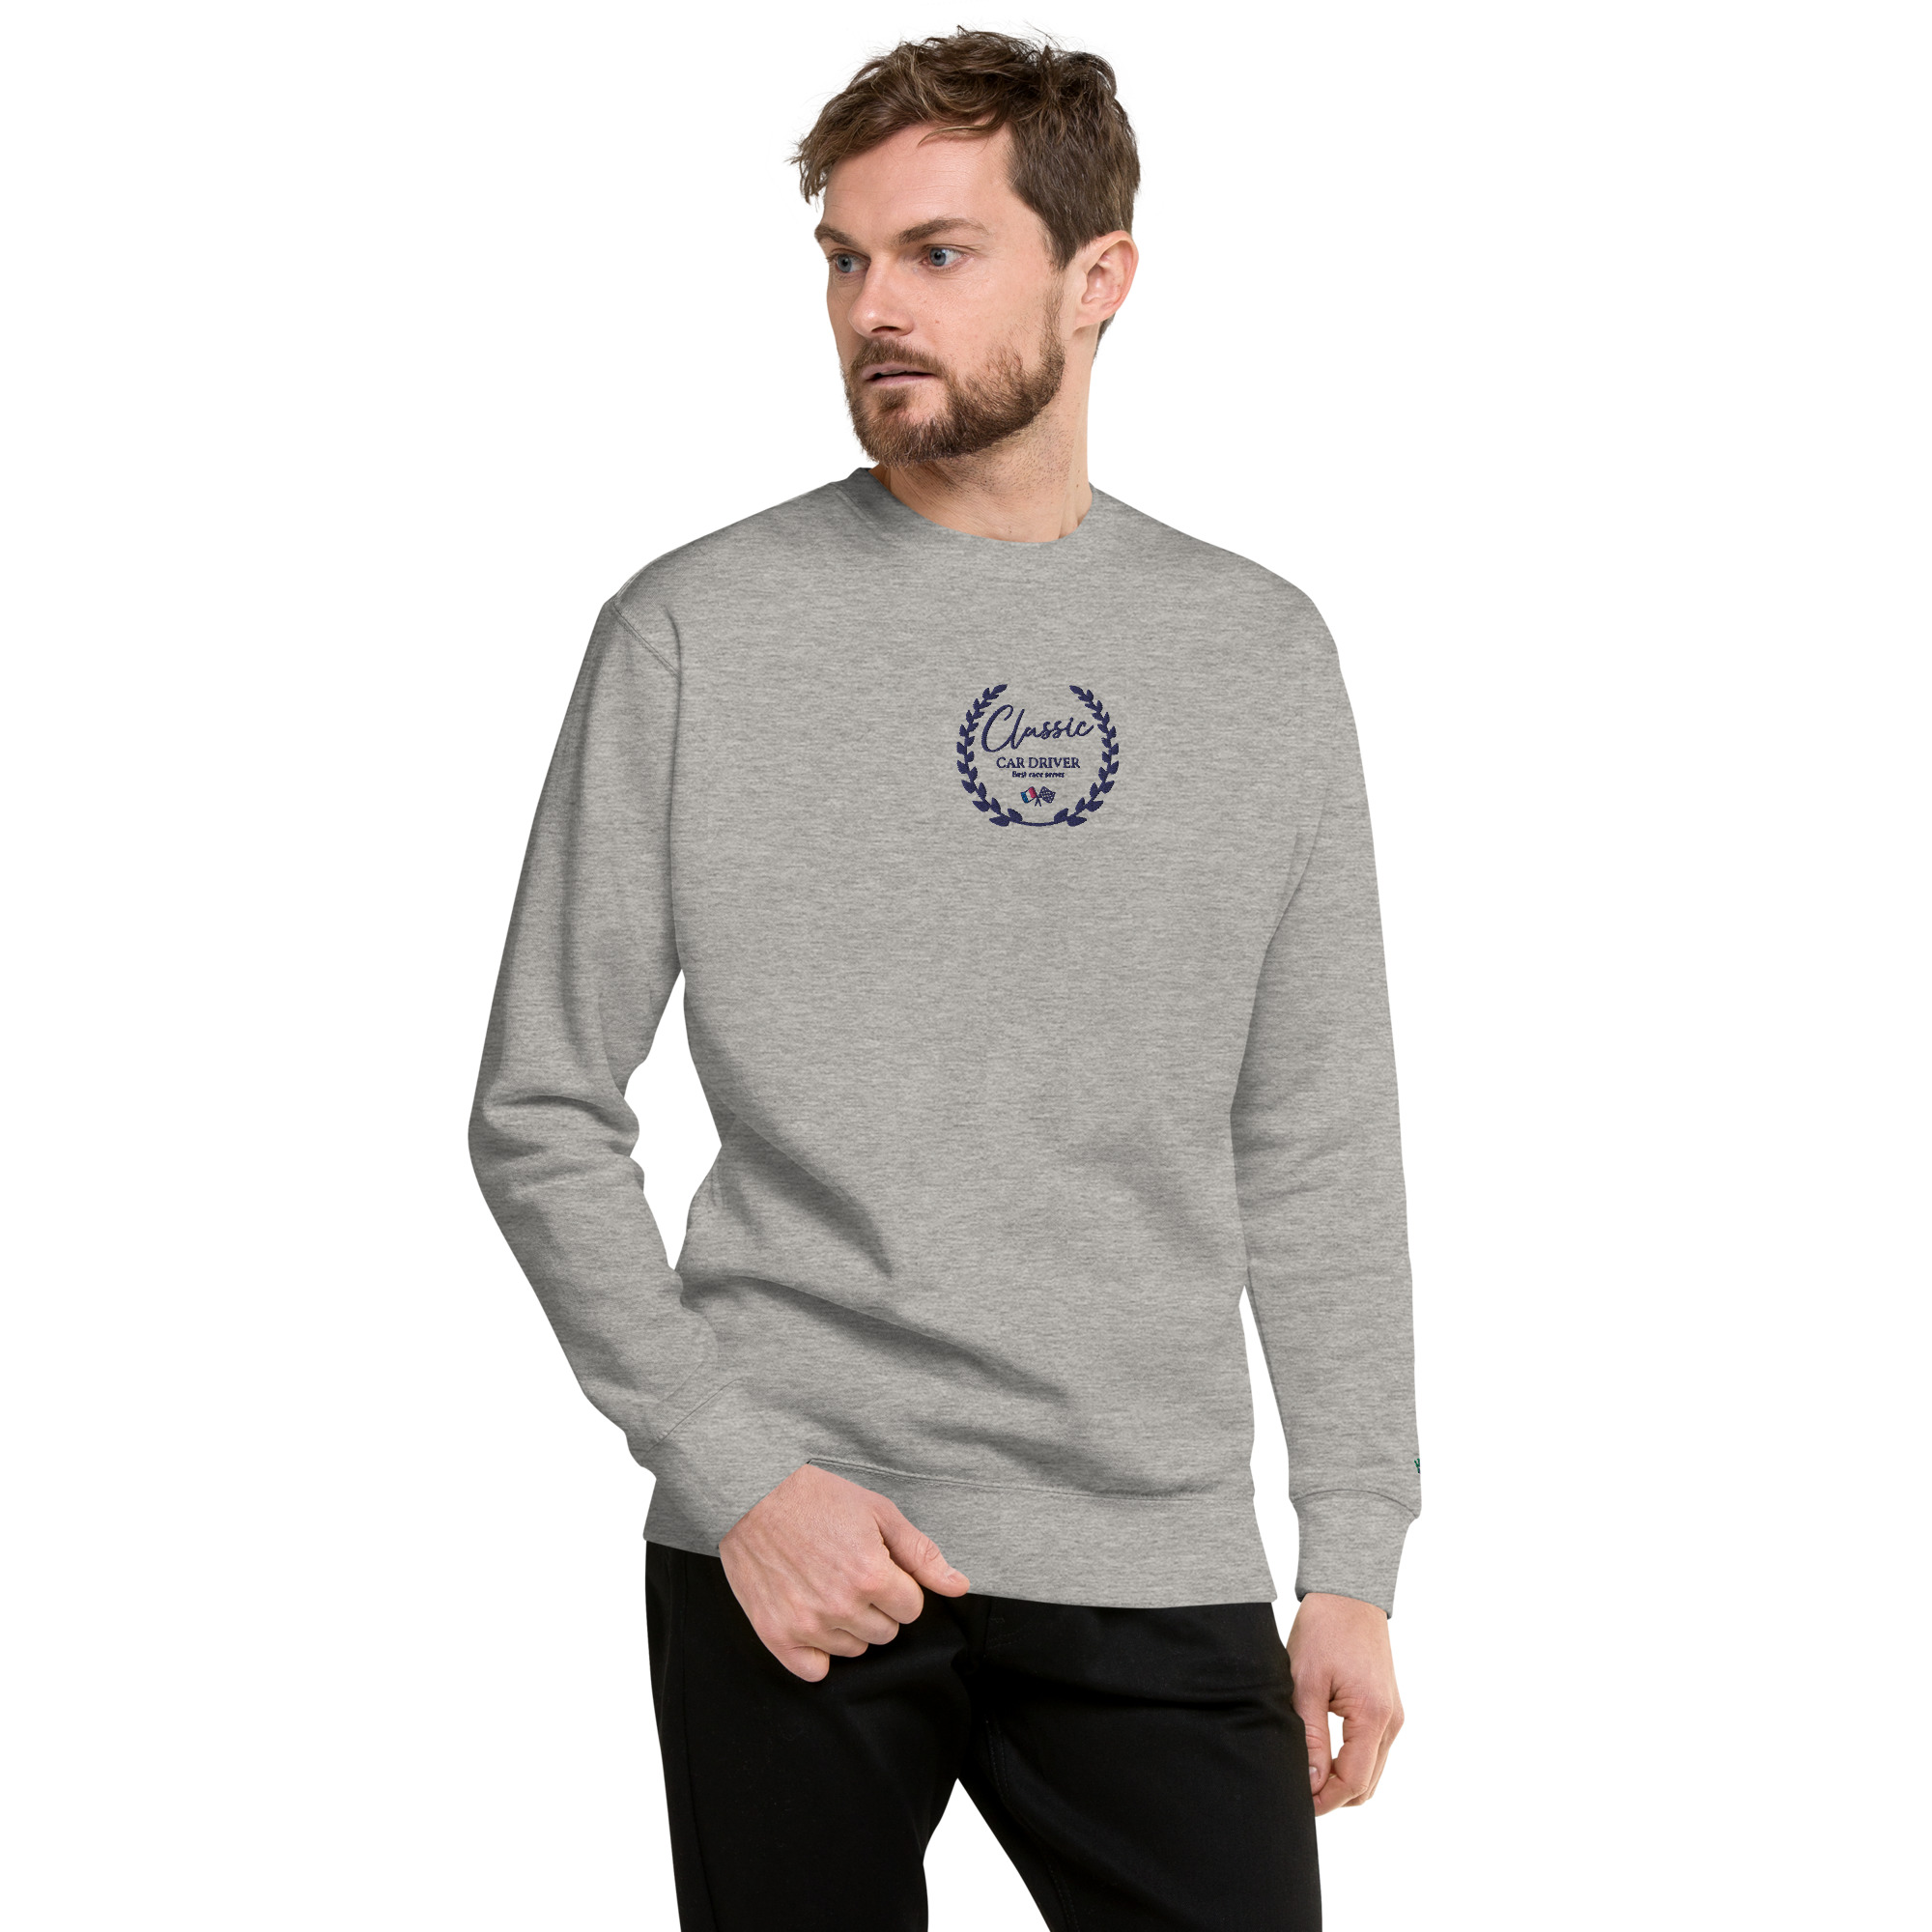 unisex-premium-sweatshirt-carbon-grey-front-63f12f03cff29.jpg